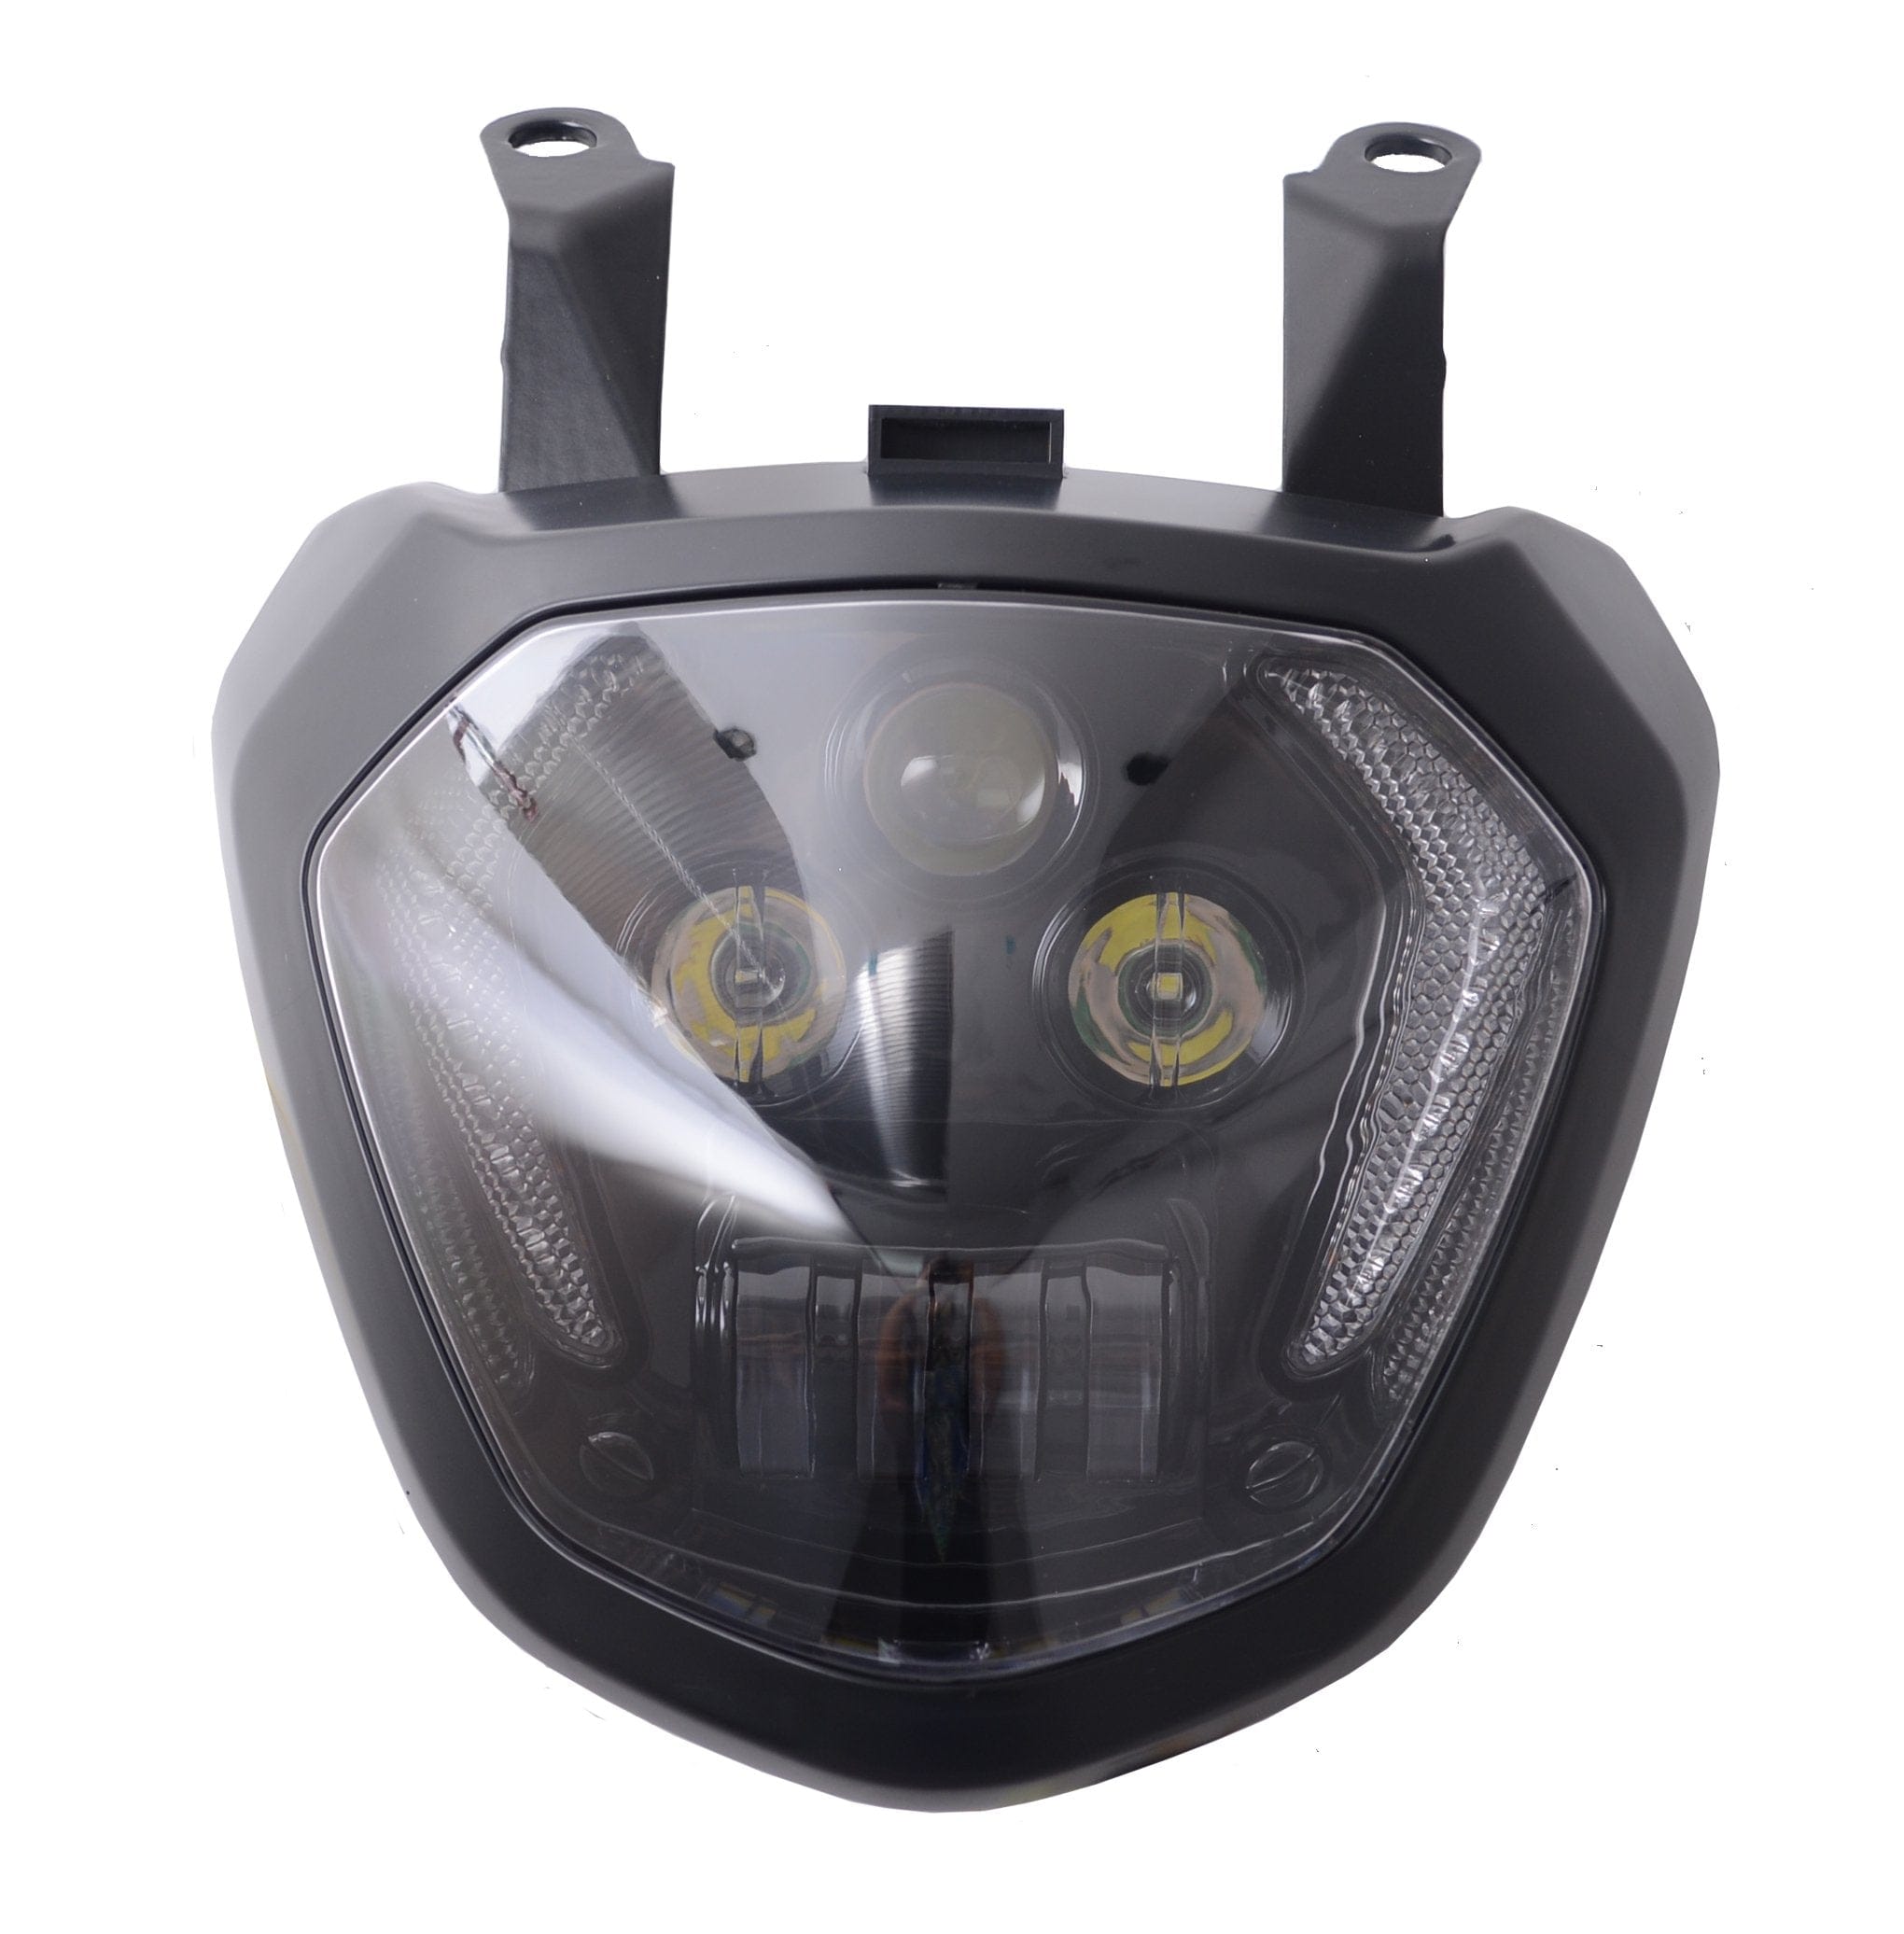 Additional LED headlights for motorcycle Yamaha MT-07 (2018 - 2020)